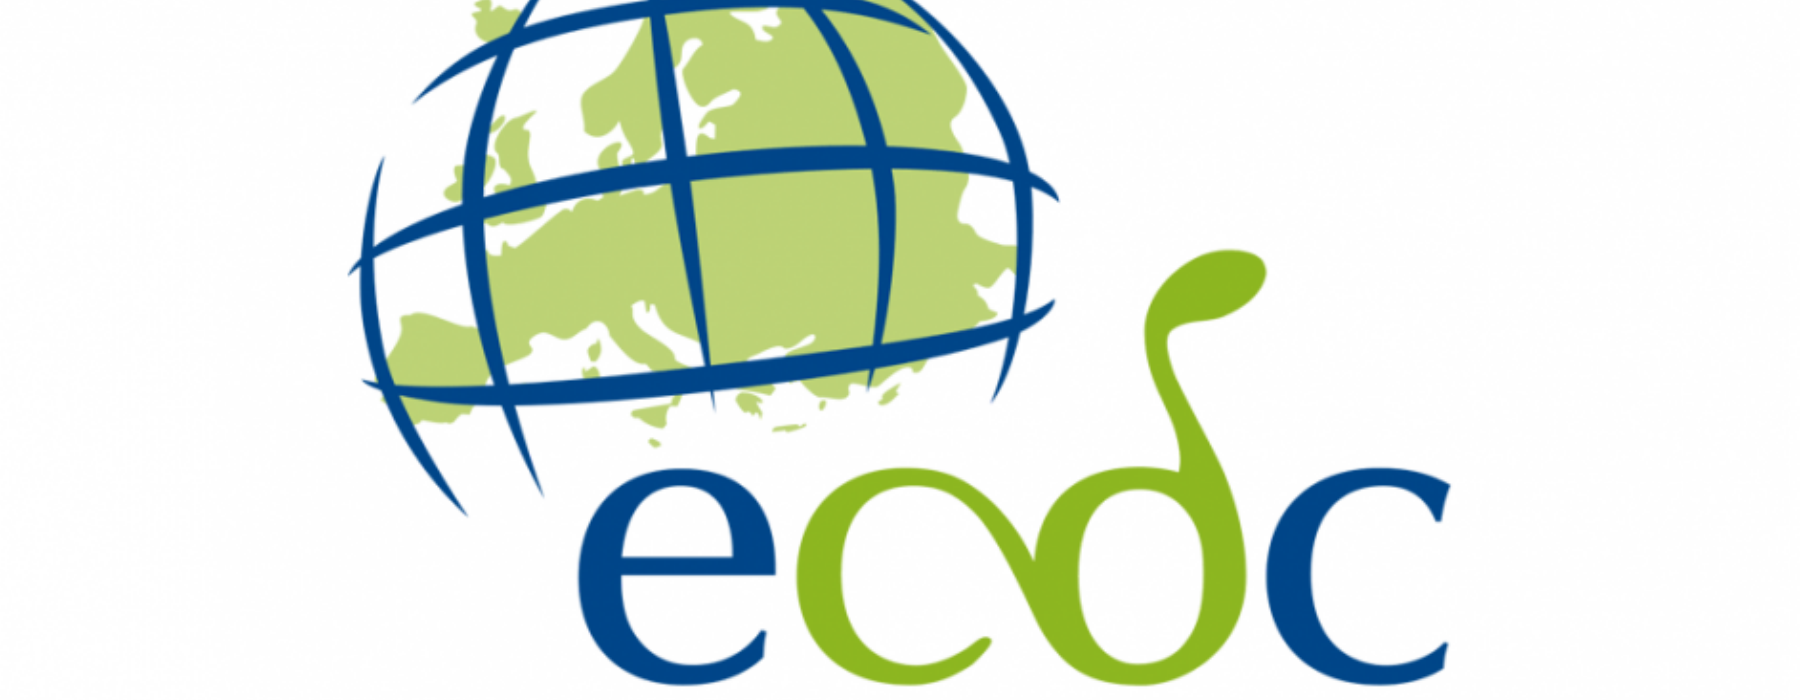 ECDC_logo